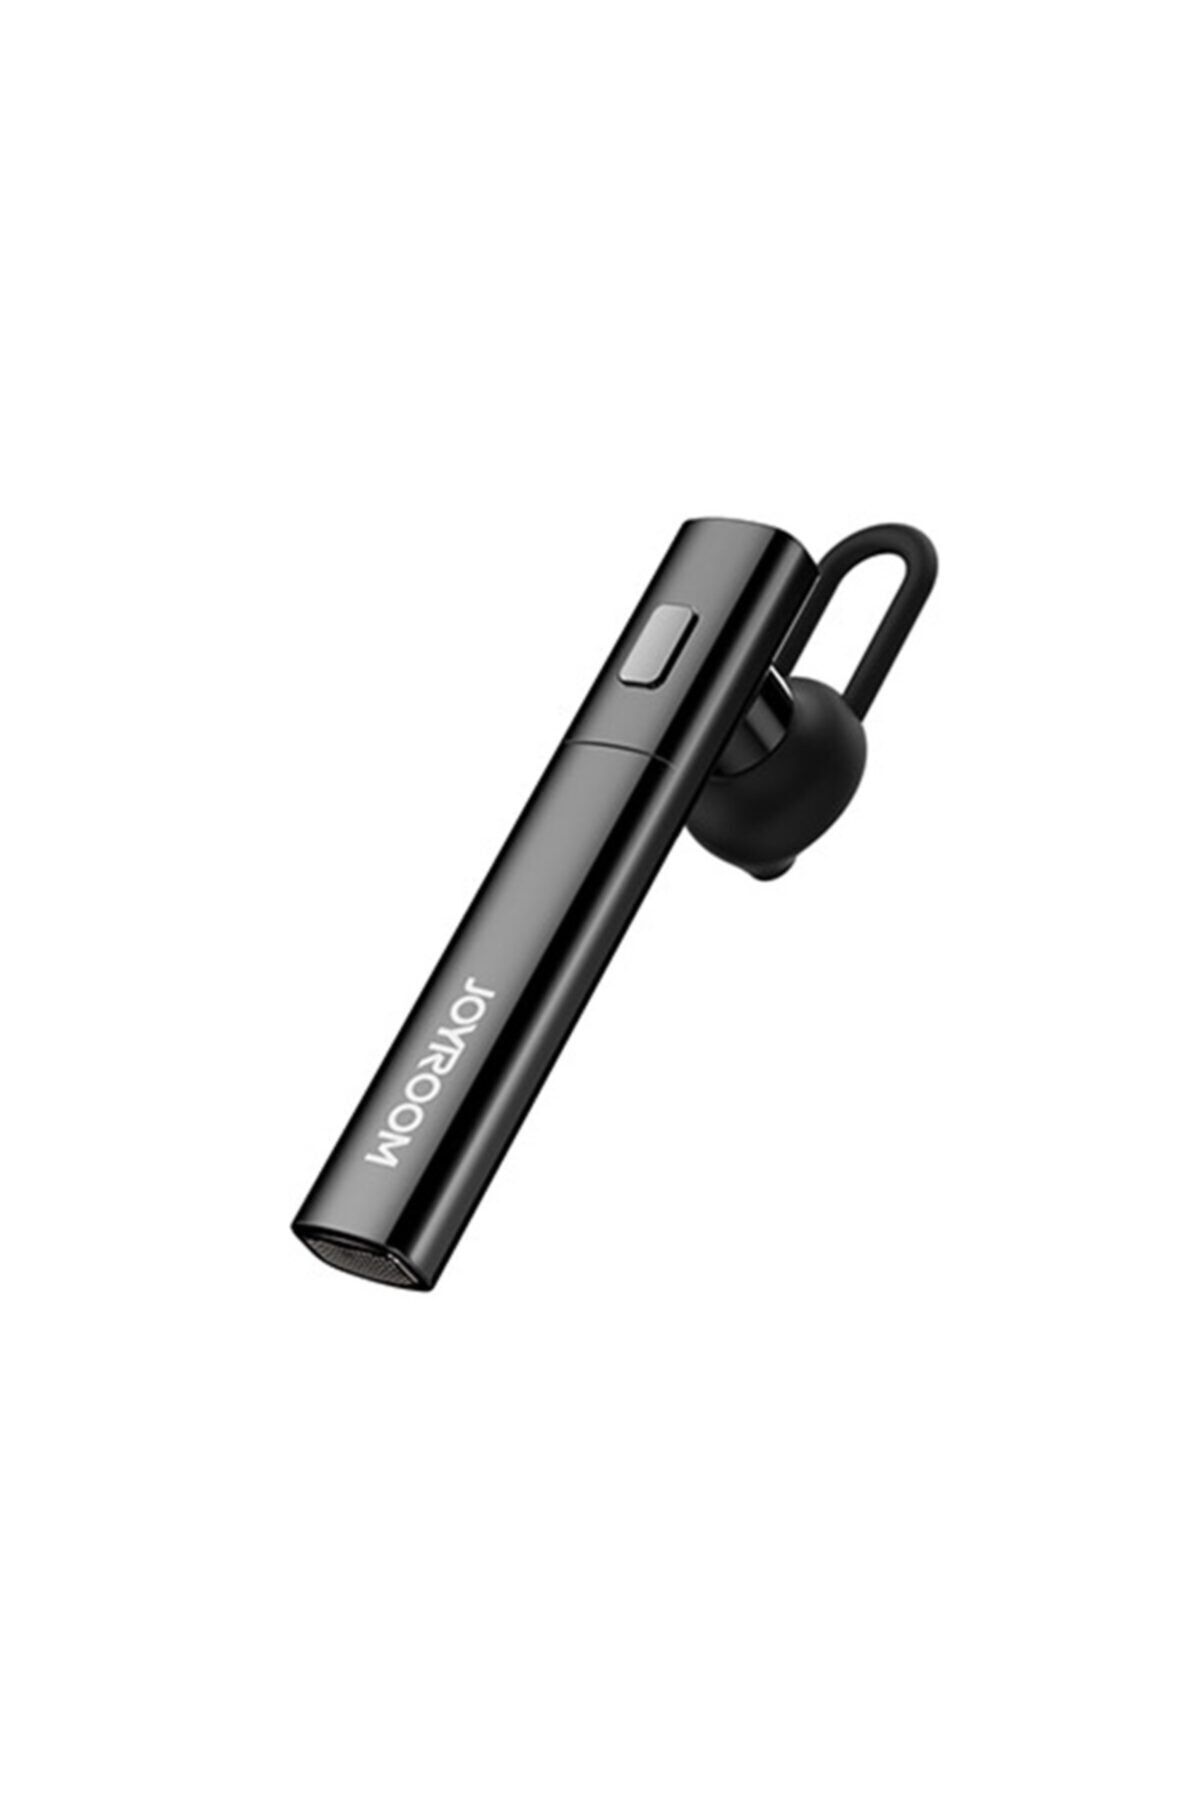 Joyroom Jr-b1 Kablosuz Bluetooth Kulaklık